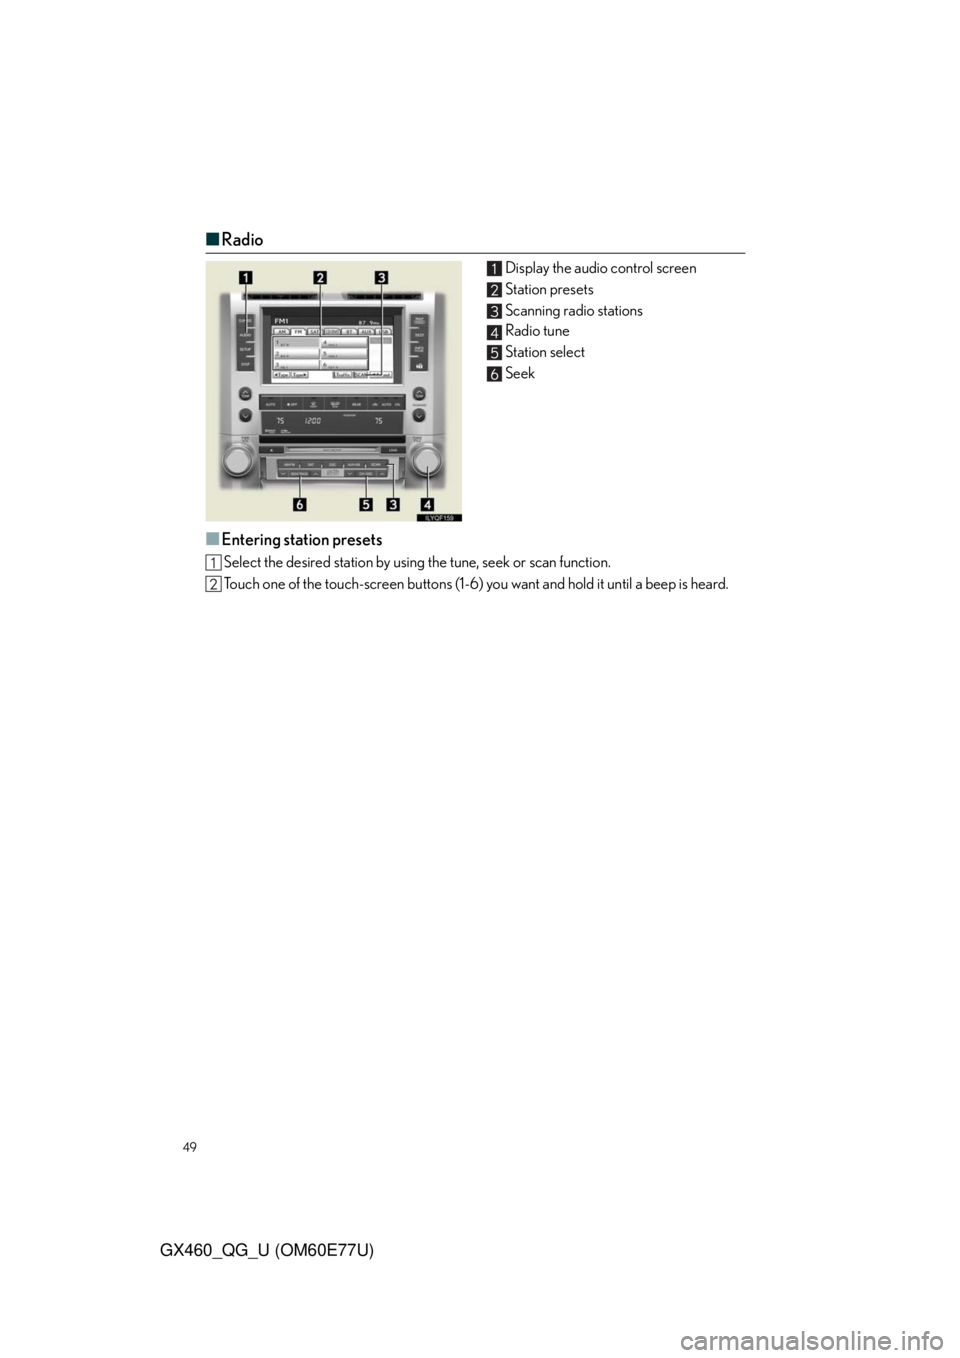 Lexus GX460 2010  Using The Bluetooth Audio System / LEXUS 2010 GX460  QUICK GUIDE (OM60E77U) Service Manual 49
GX460_QG_U (OM60E77U)
■Radio
Display the audio control screen
Station presets
Scanning radio stations
Radio tune
Station select
Seek
■Entering station presets
Select the desired station by usin